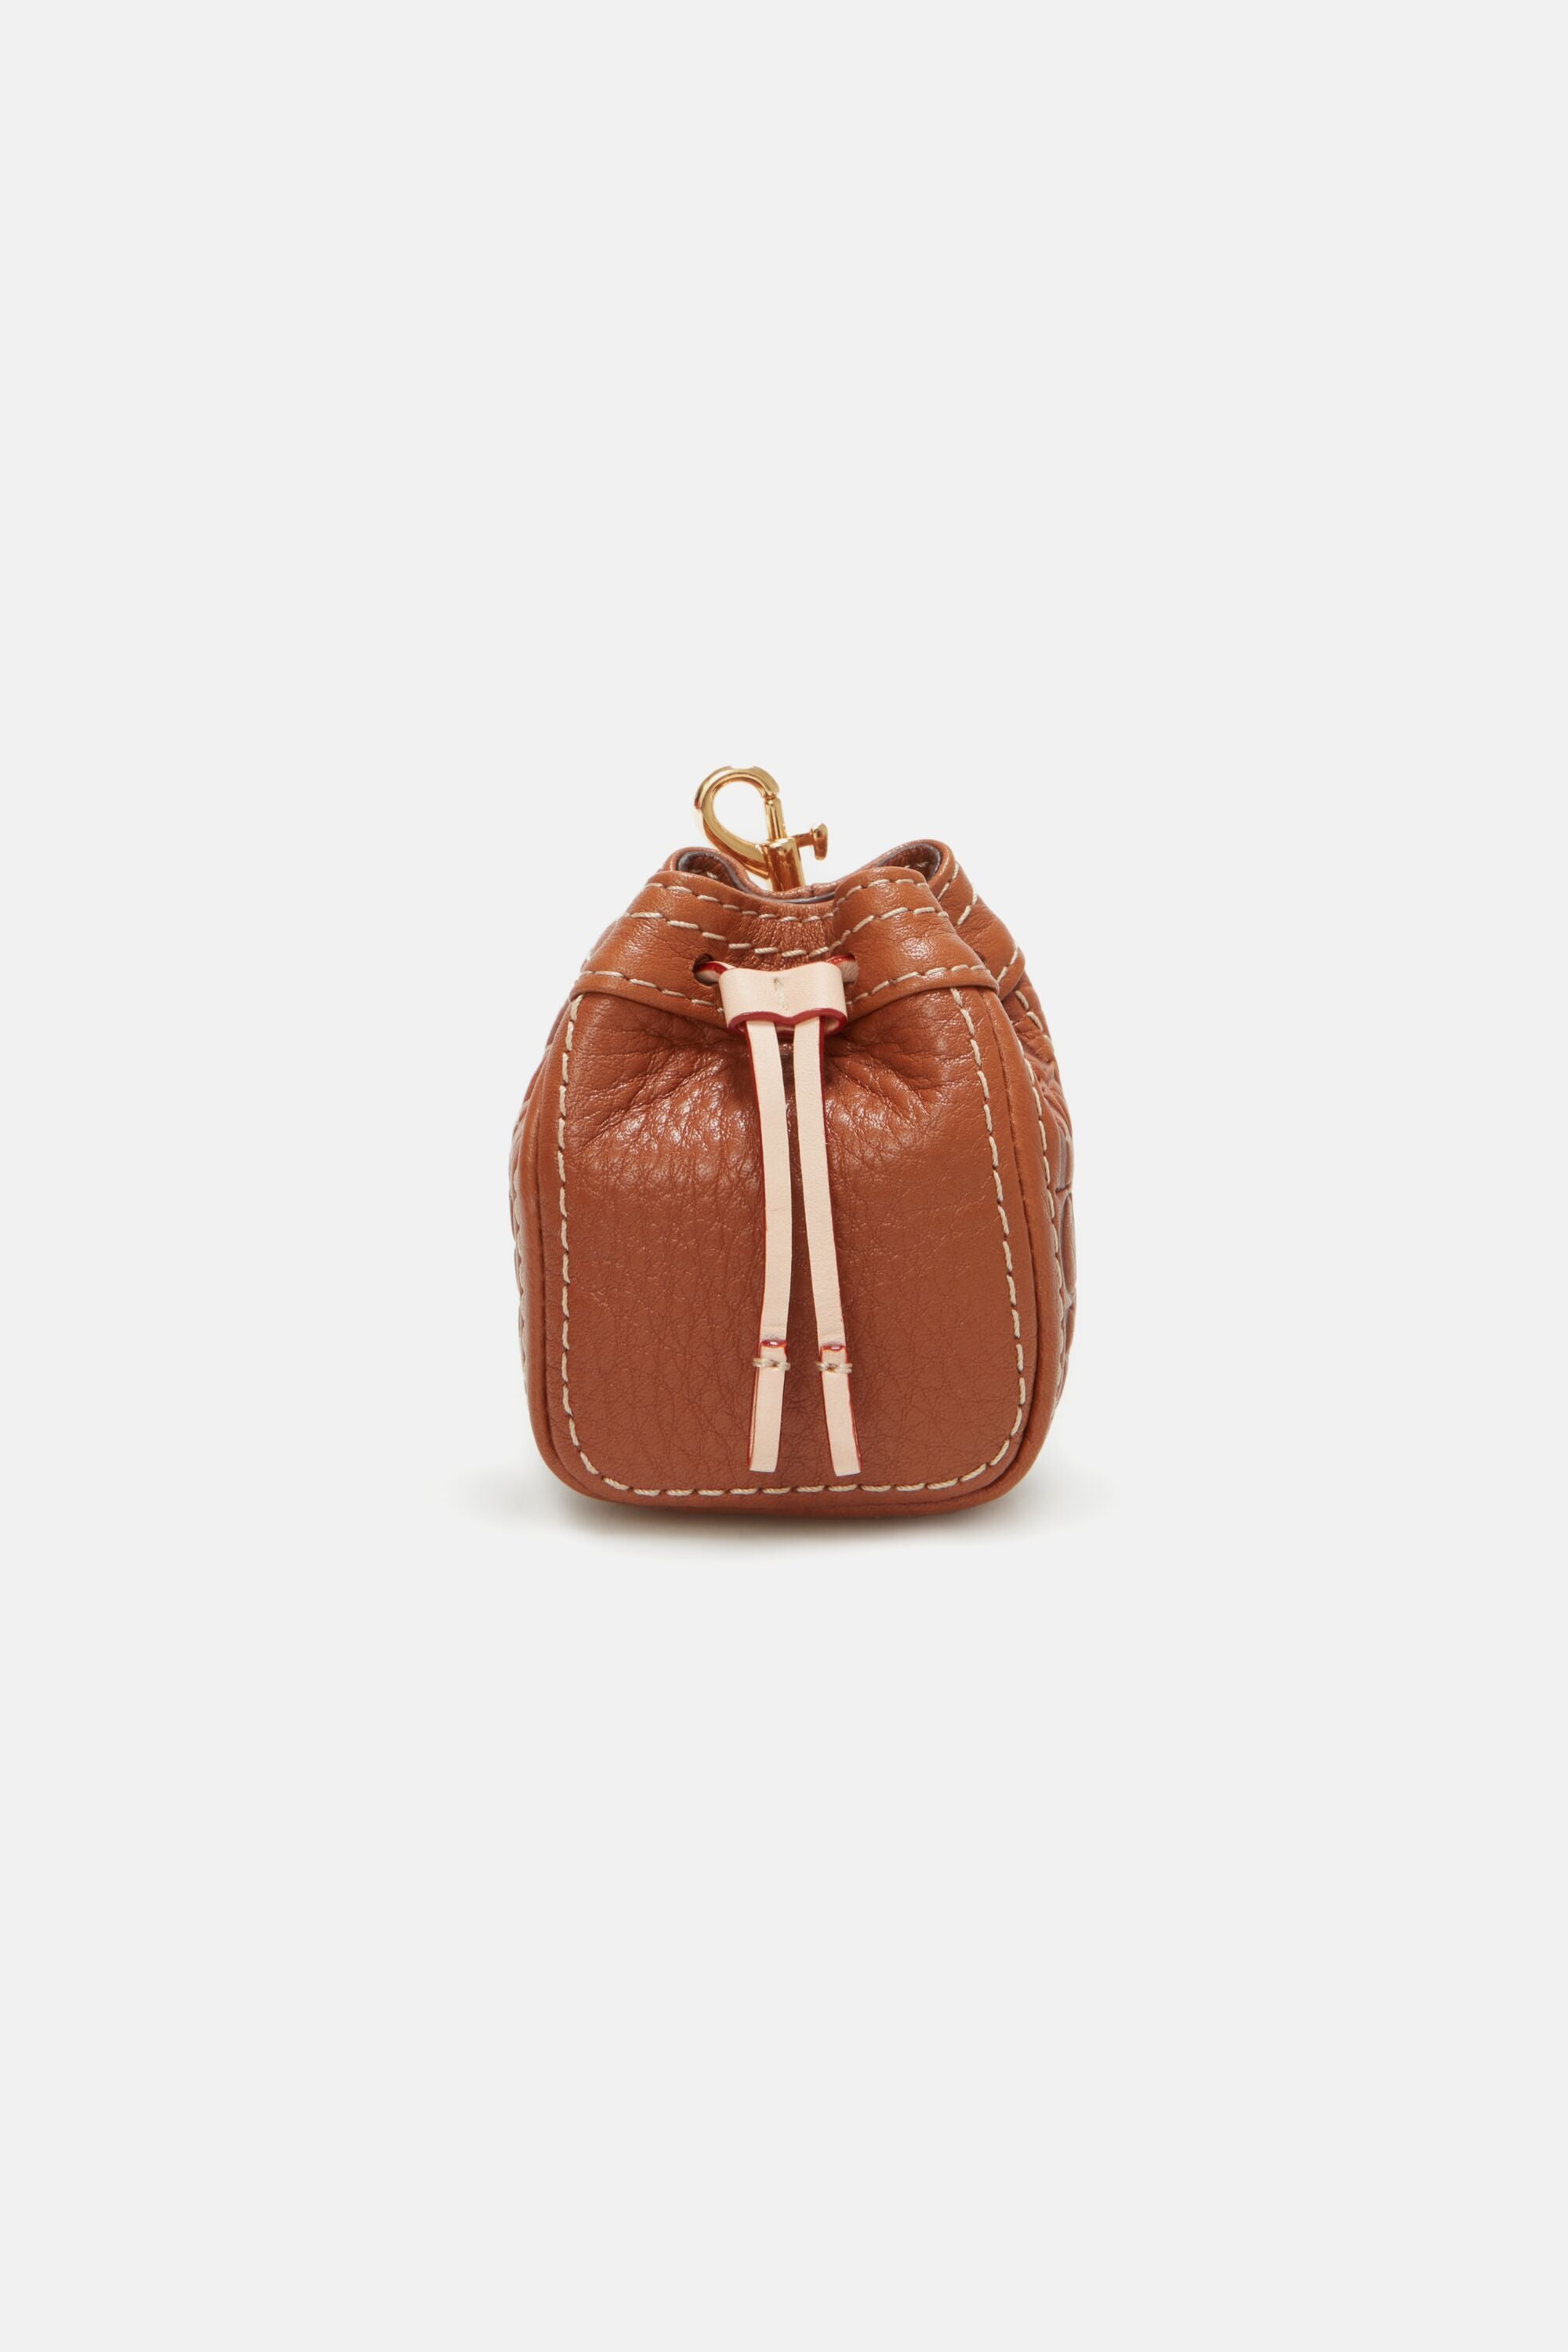 Louis Vuitton Tassel Pebbled Leather Bag Charm